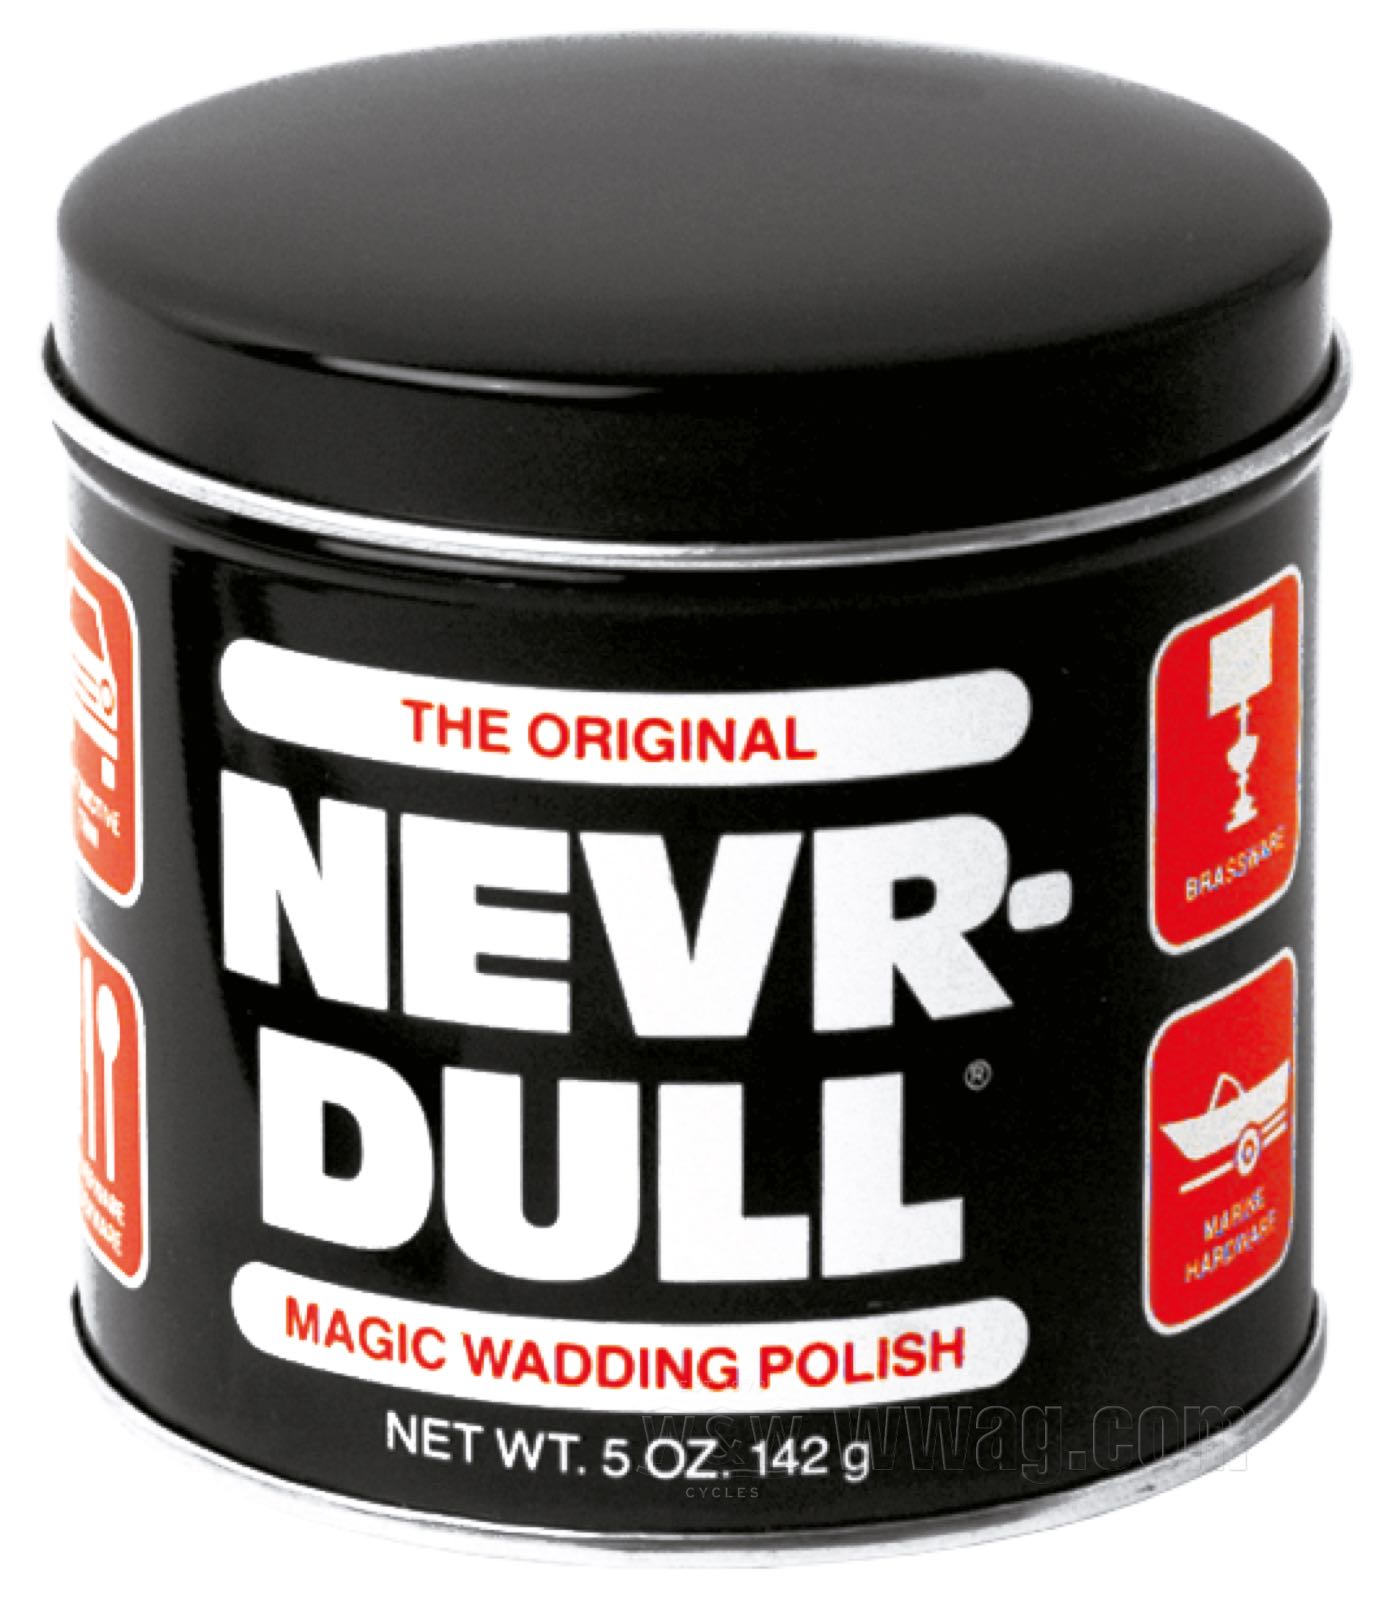 The Original Nevr-Dull Magic Wadding Polish Removes Clean & Polish